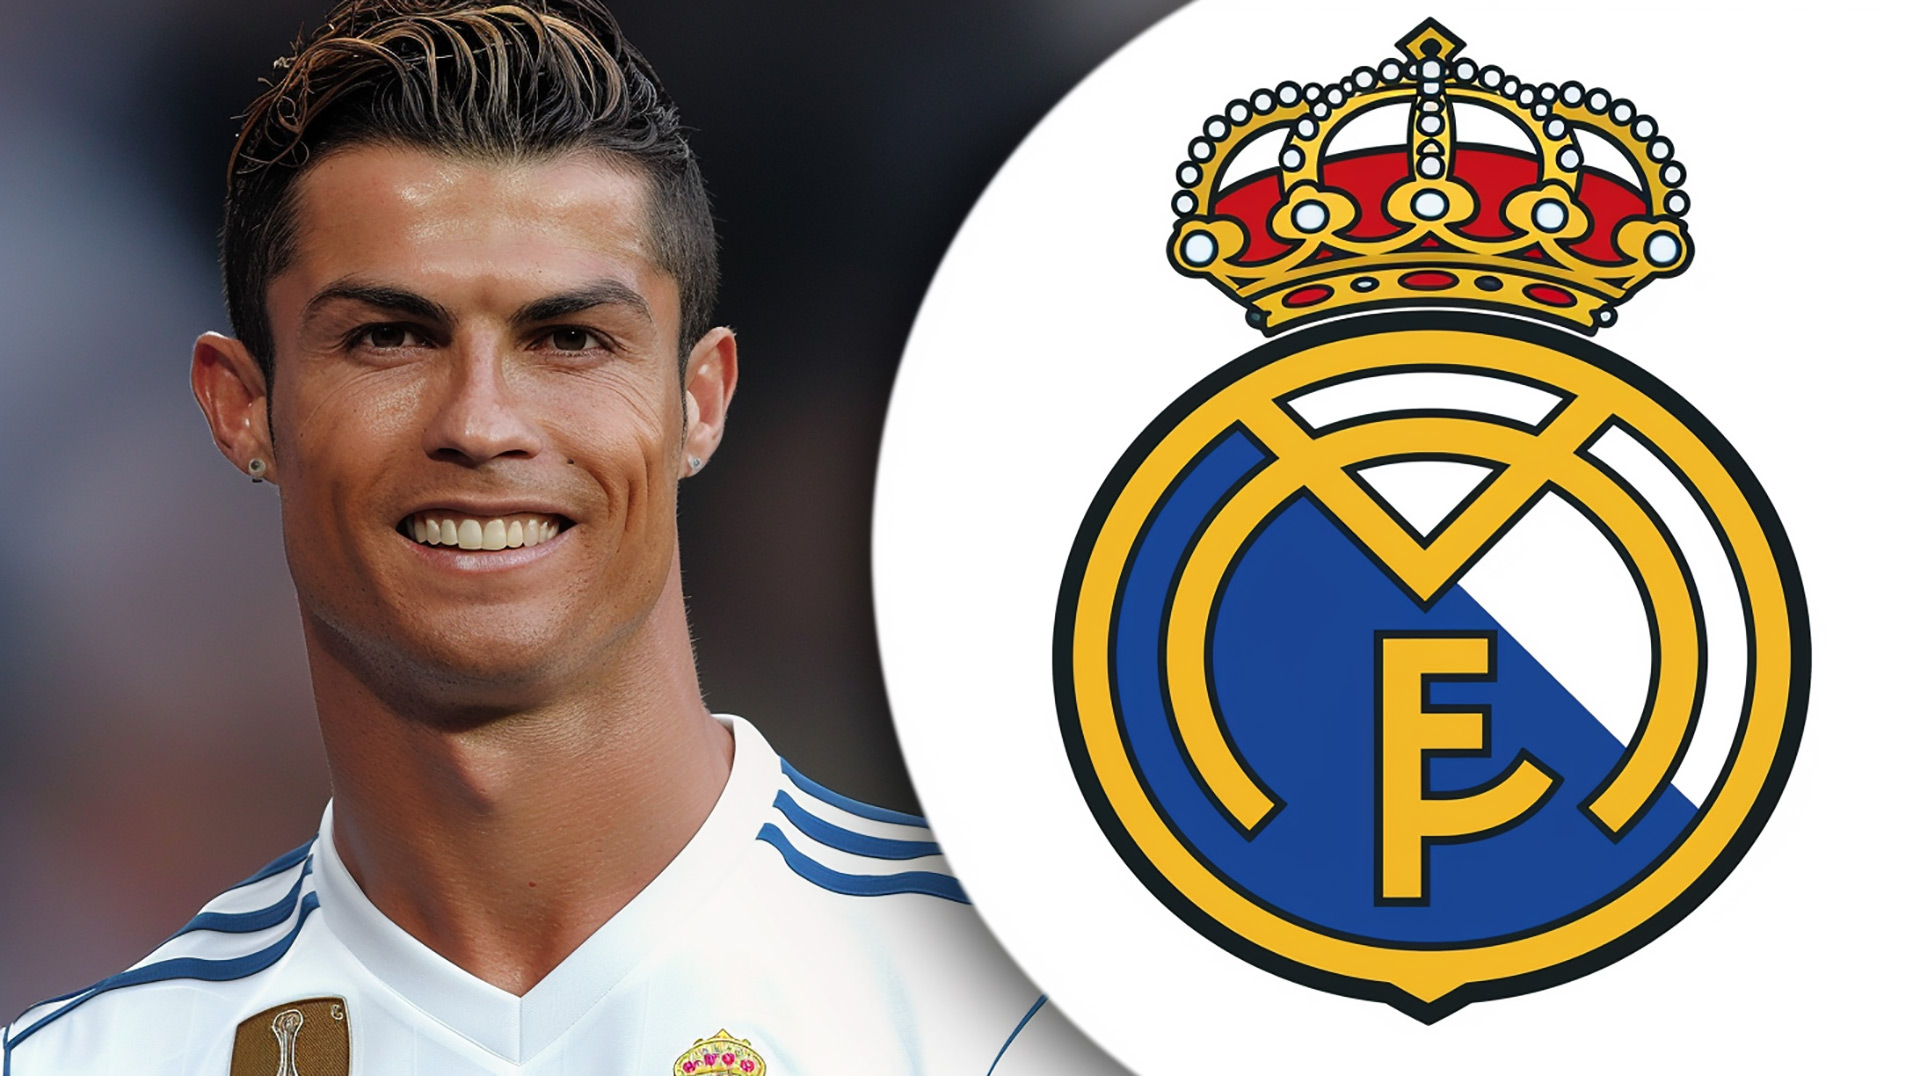 Ronaldo Real Madrid Goals: Free Desktop Wallpaper